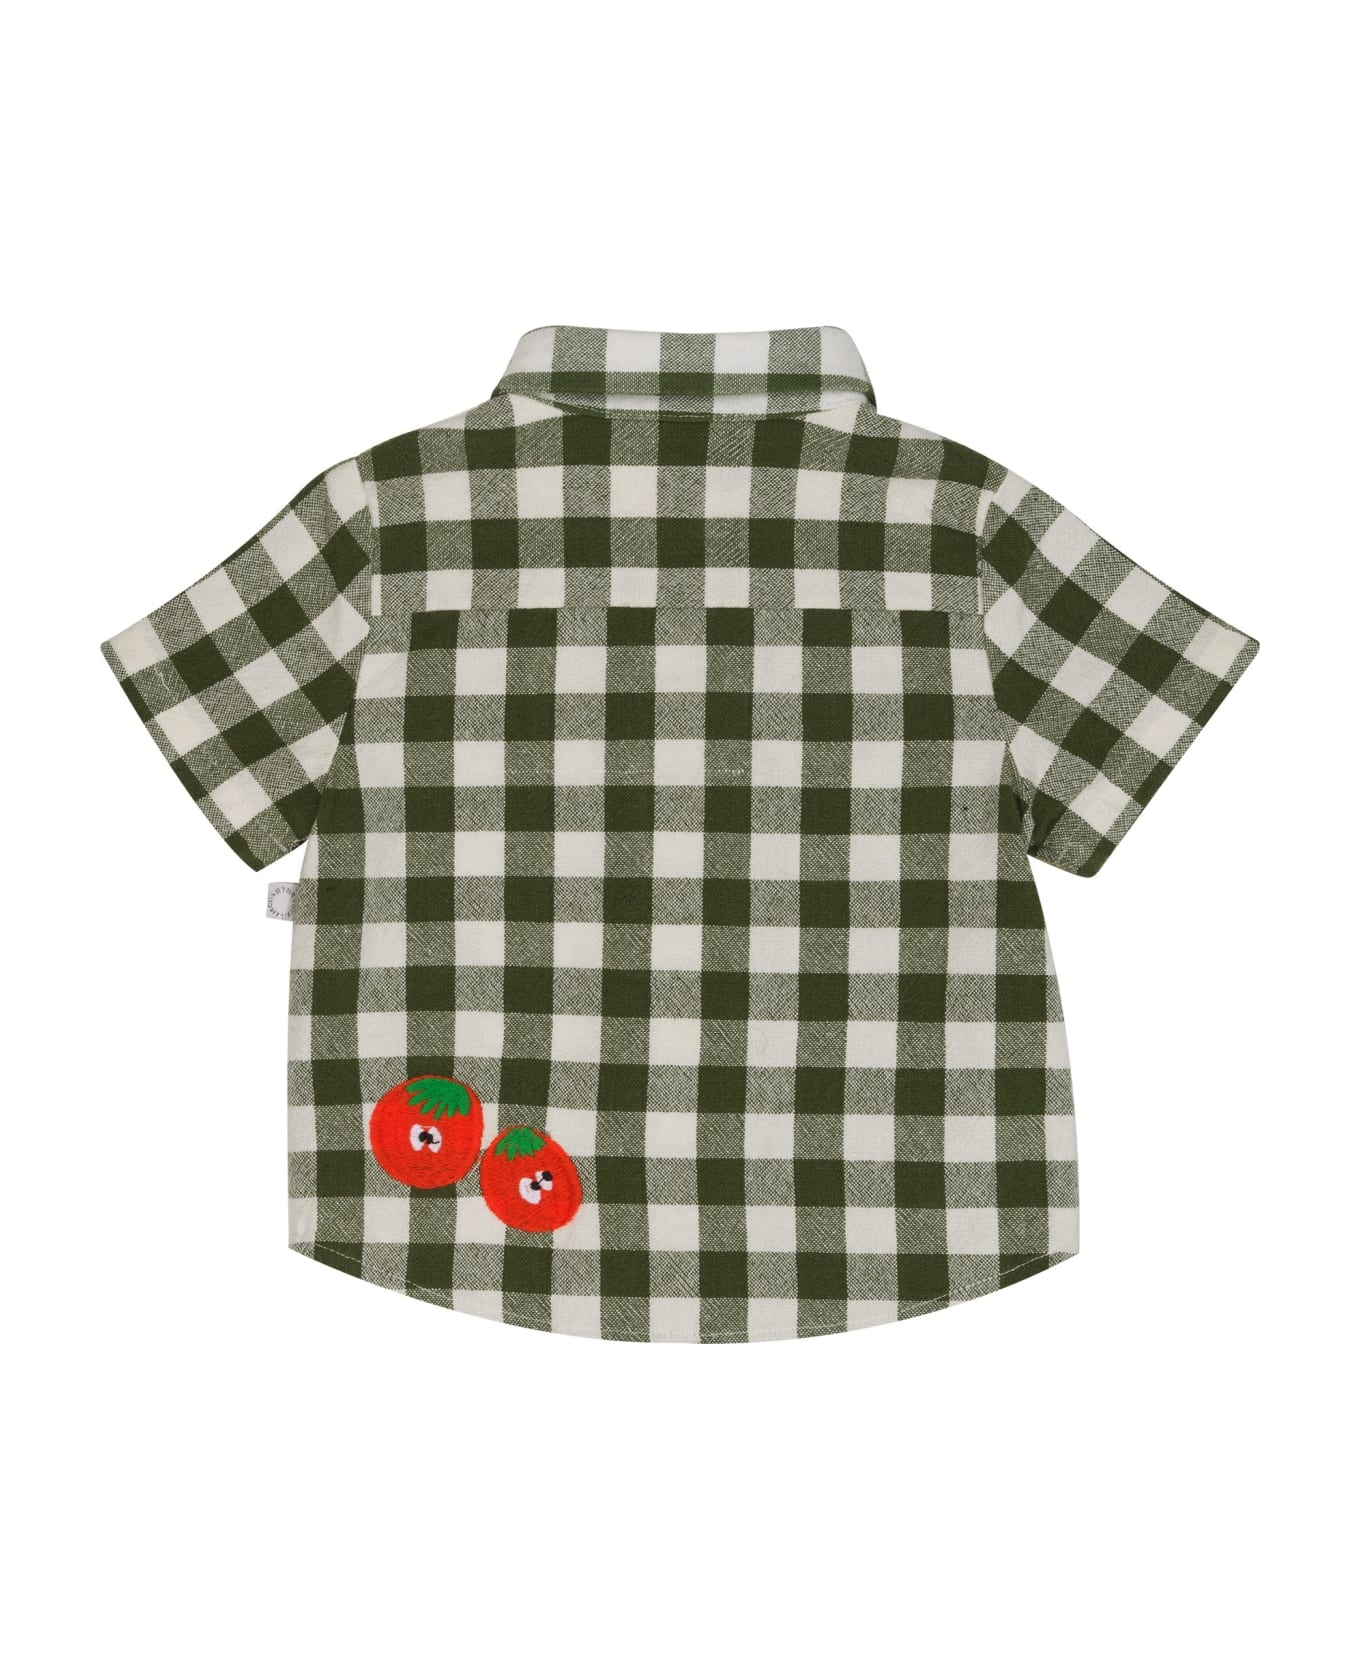 Stella McCartney Kids Shirt With Embroidery - Green